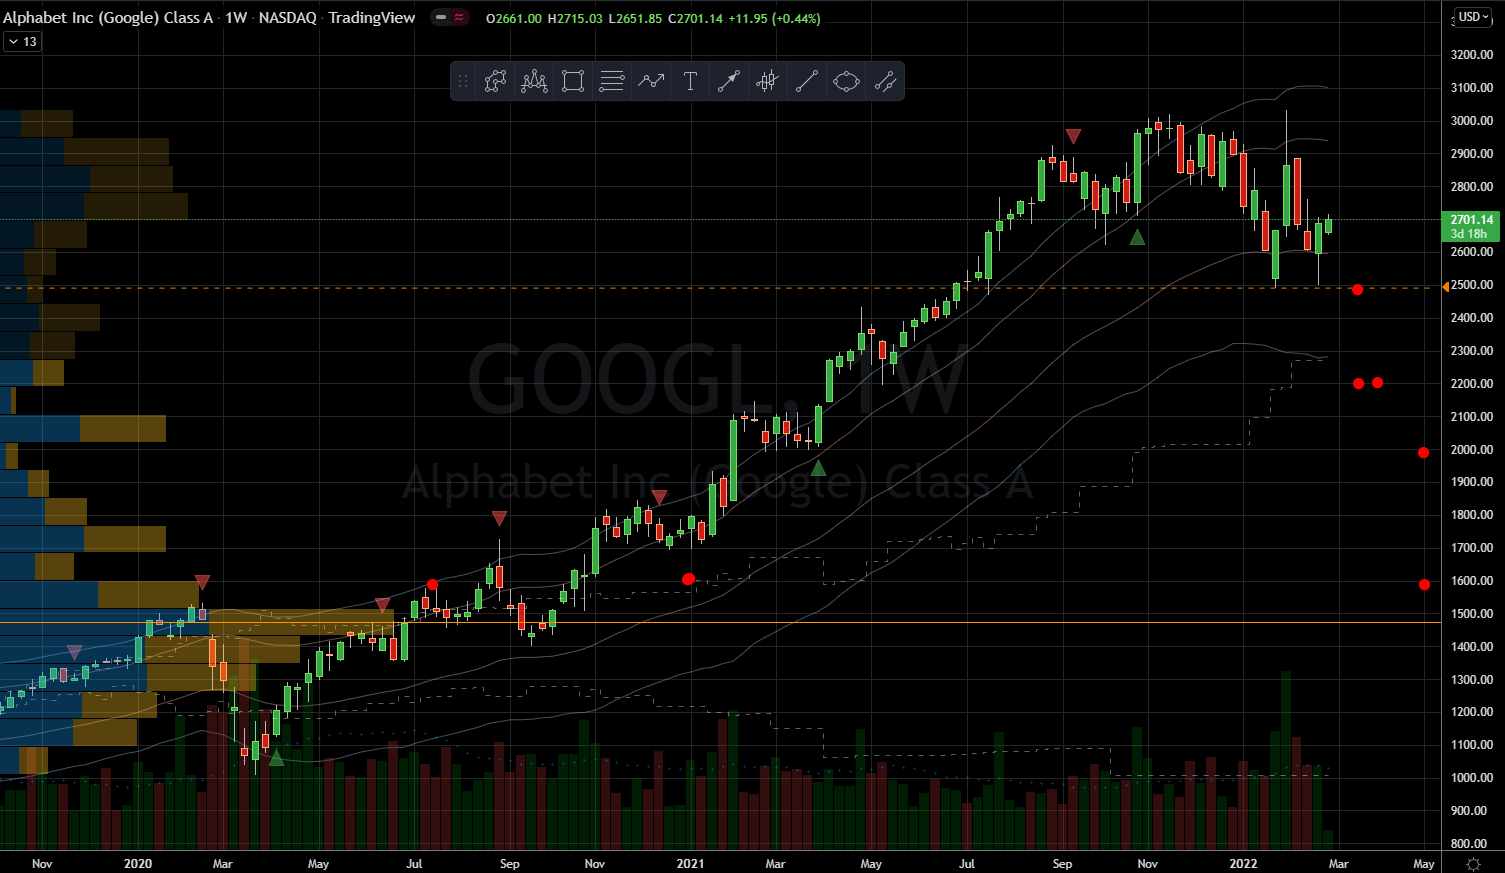 Googl stock